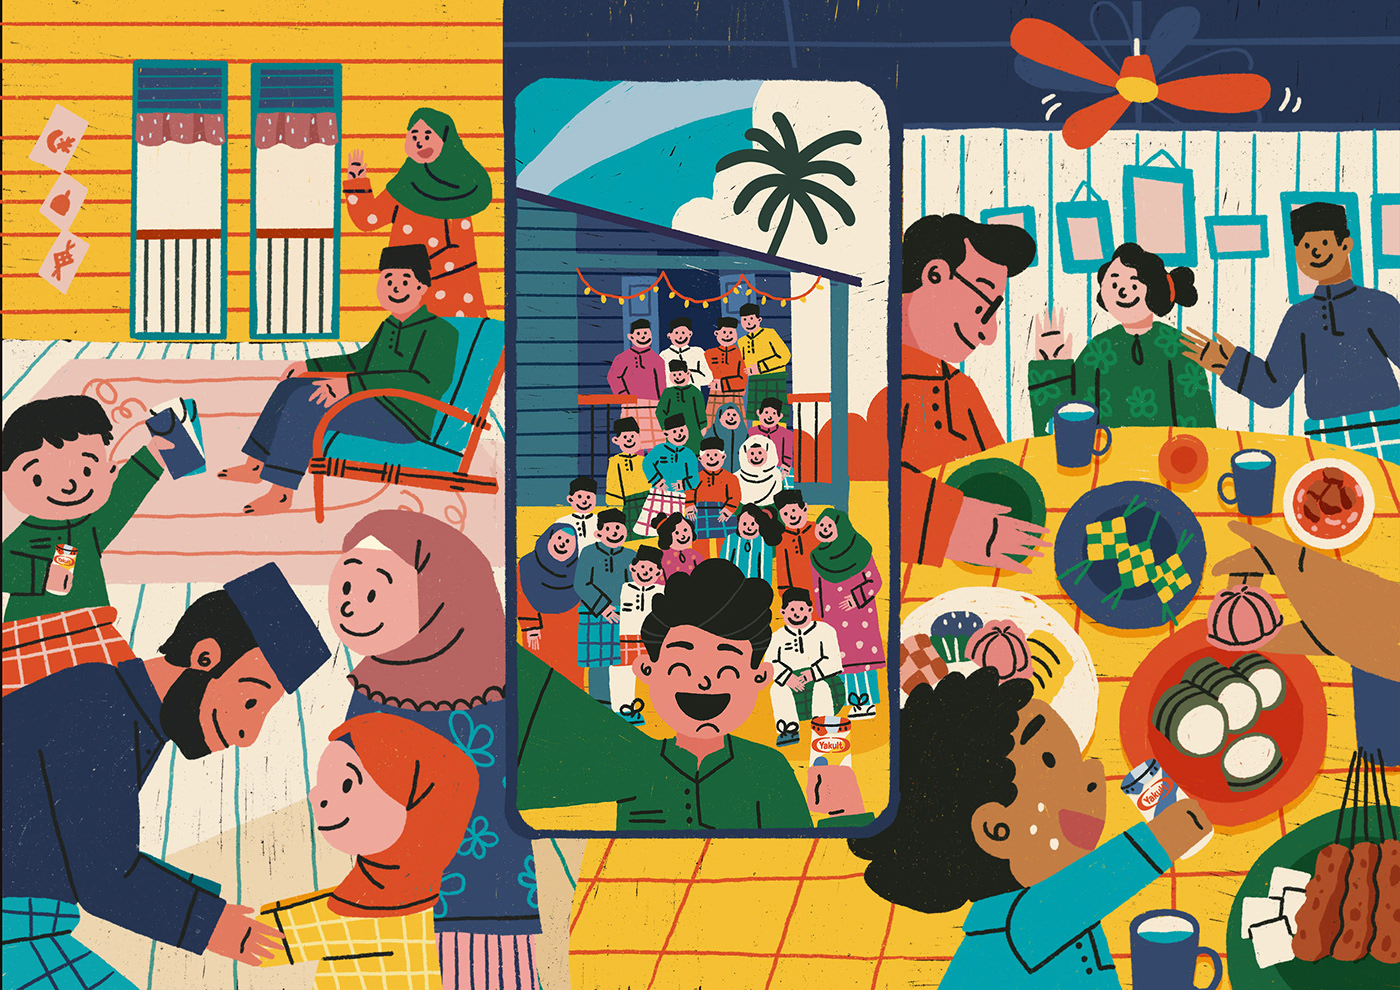 AIDILFITRI celebration Eid malaysia Mubarak projek sembangsembang raya sembangsembang Quirky Illustration